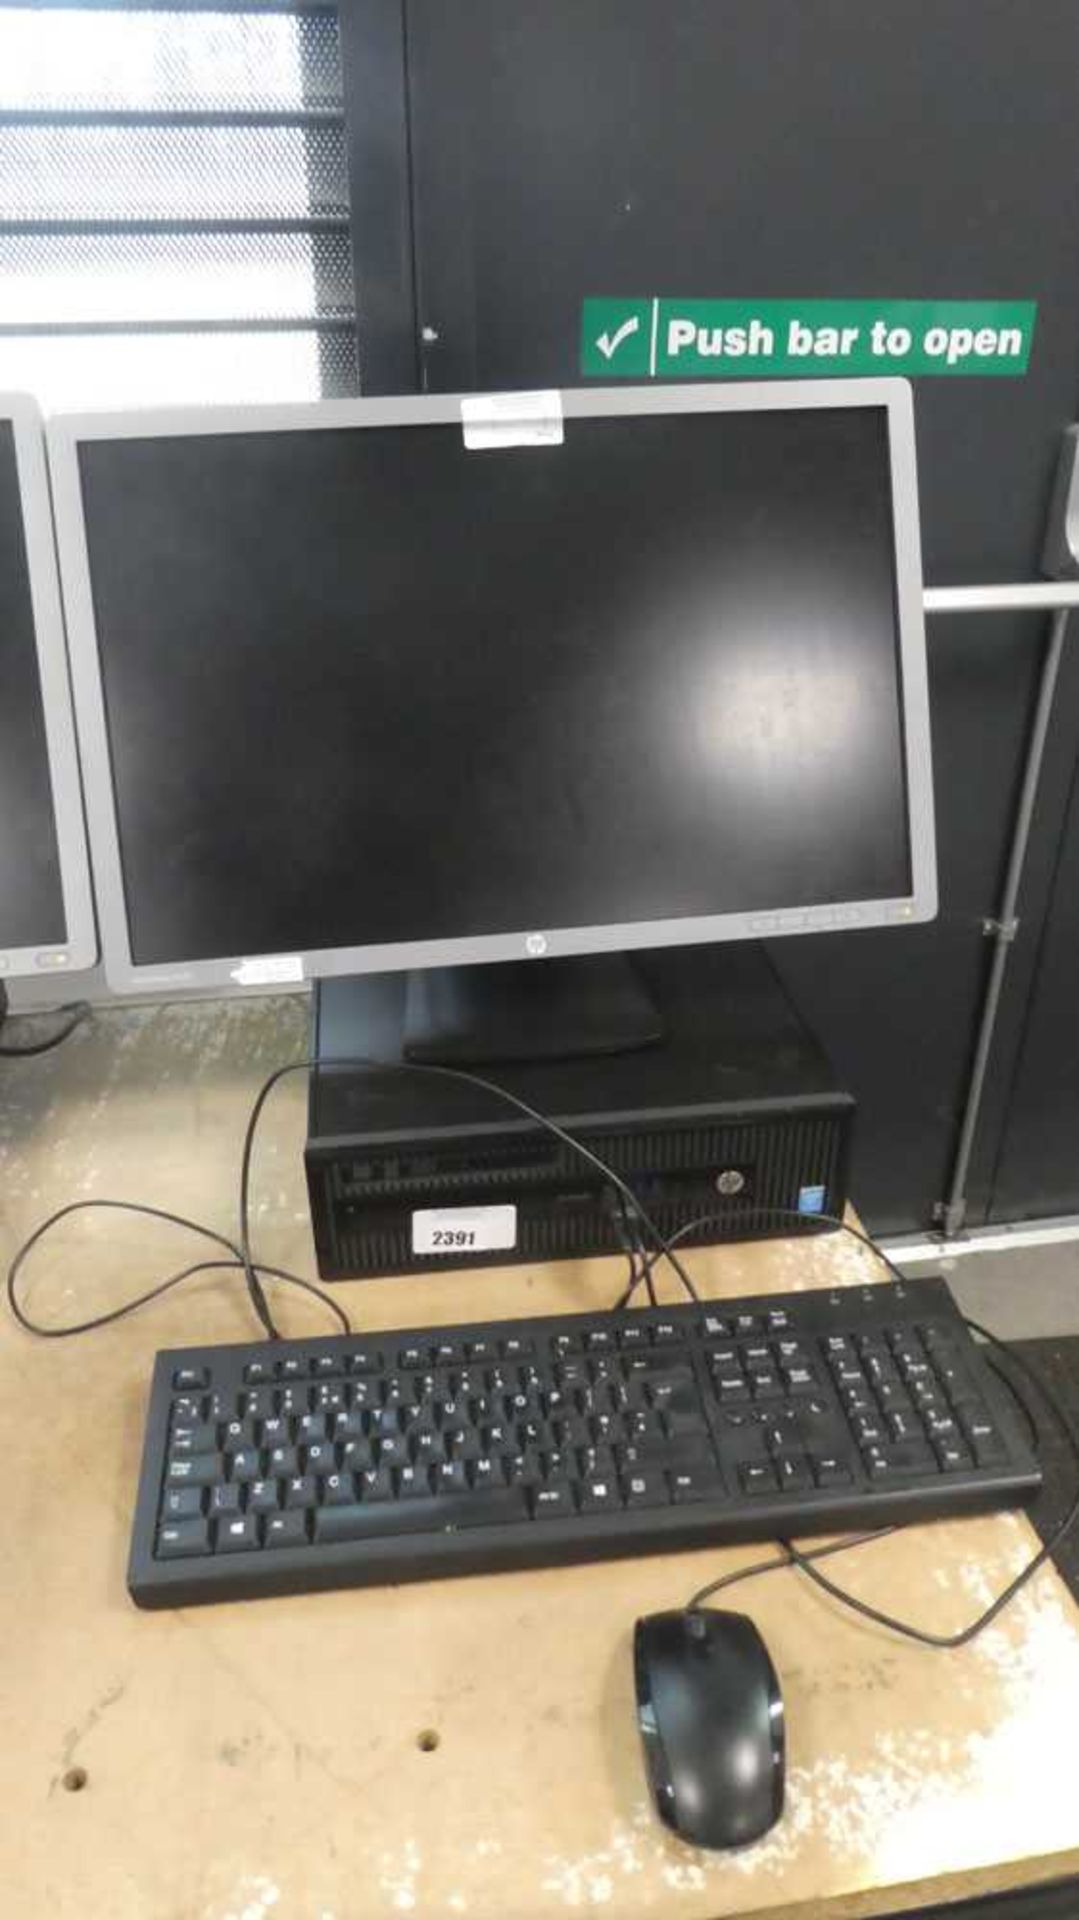 +VAT HP pro Desk 400 G1 computer with i5 4th gen, processor, 4gb ram and 500gb storage running